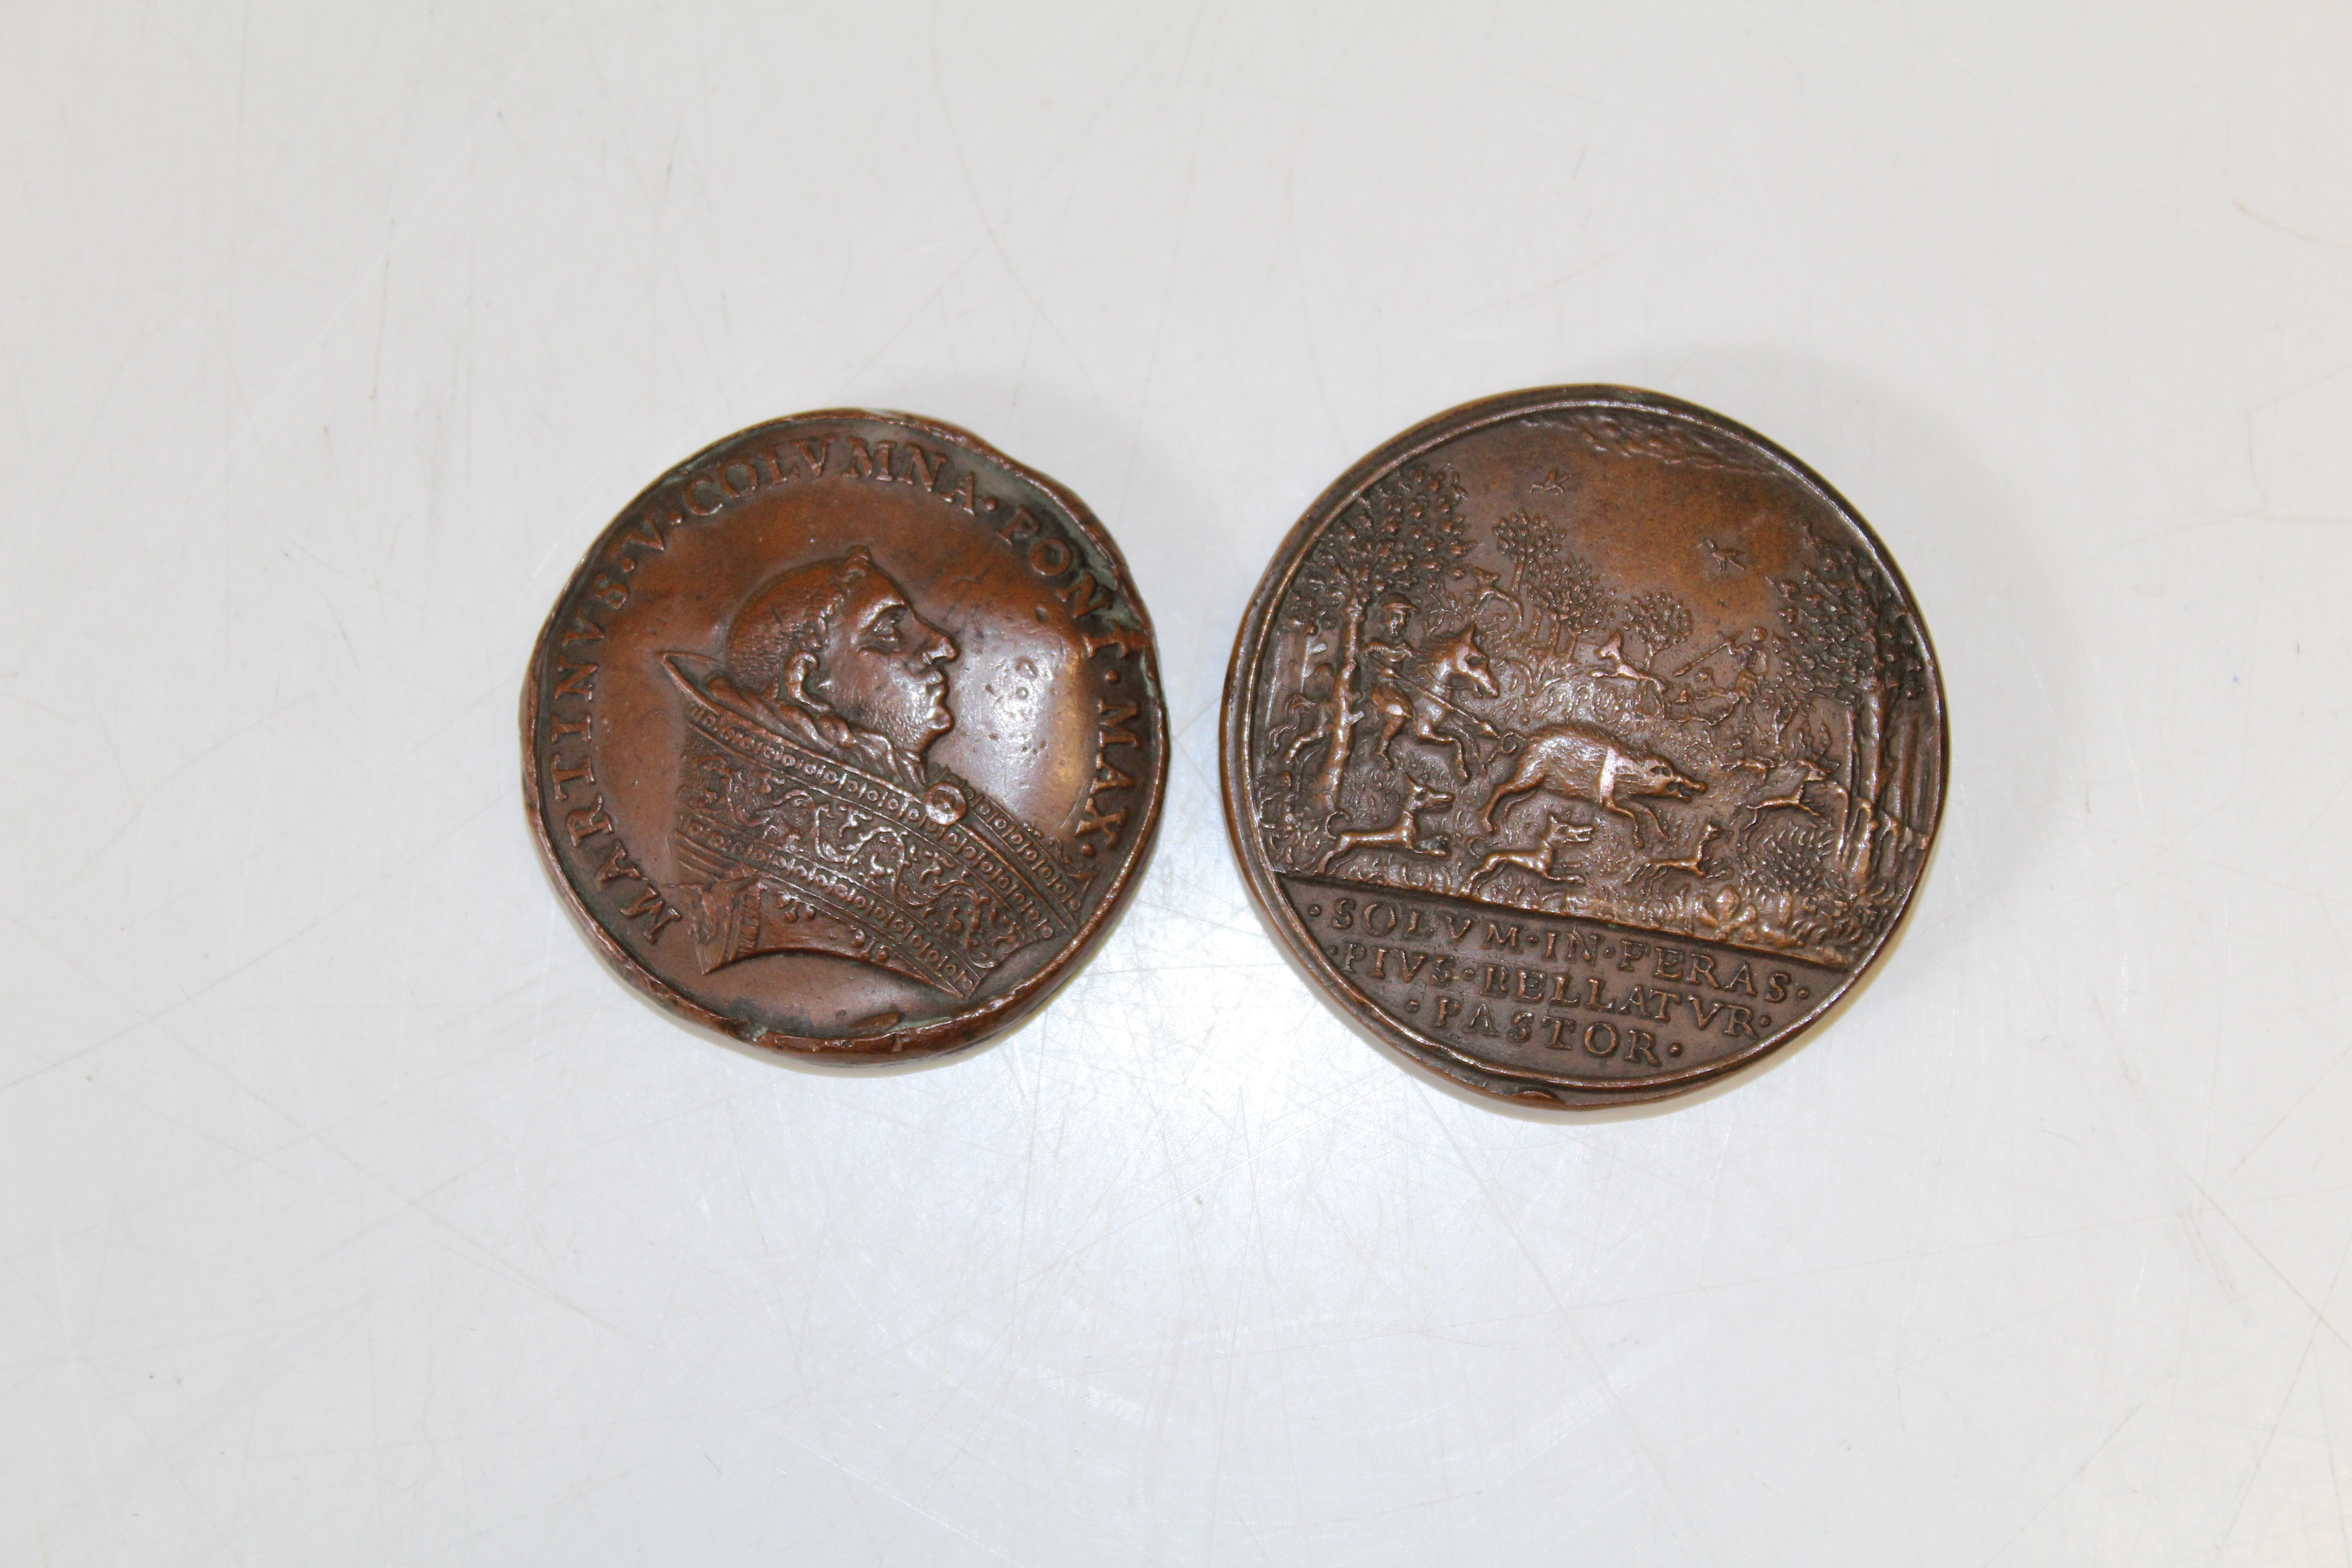 Two Pope Pavlus II Pont Max medallions